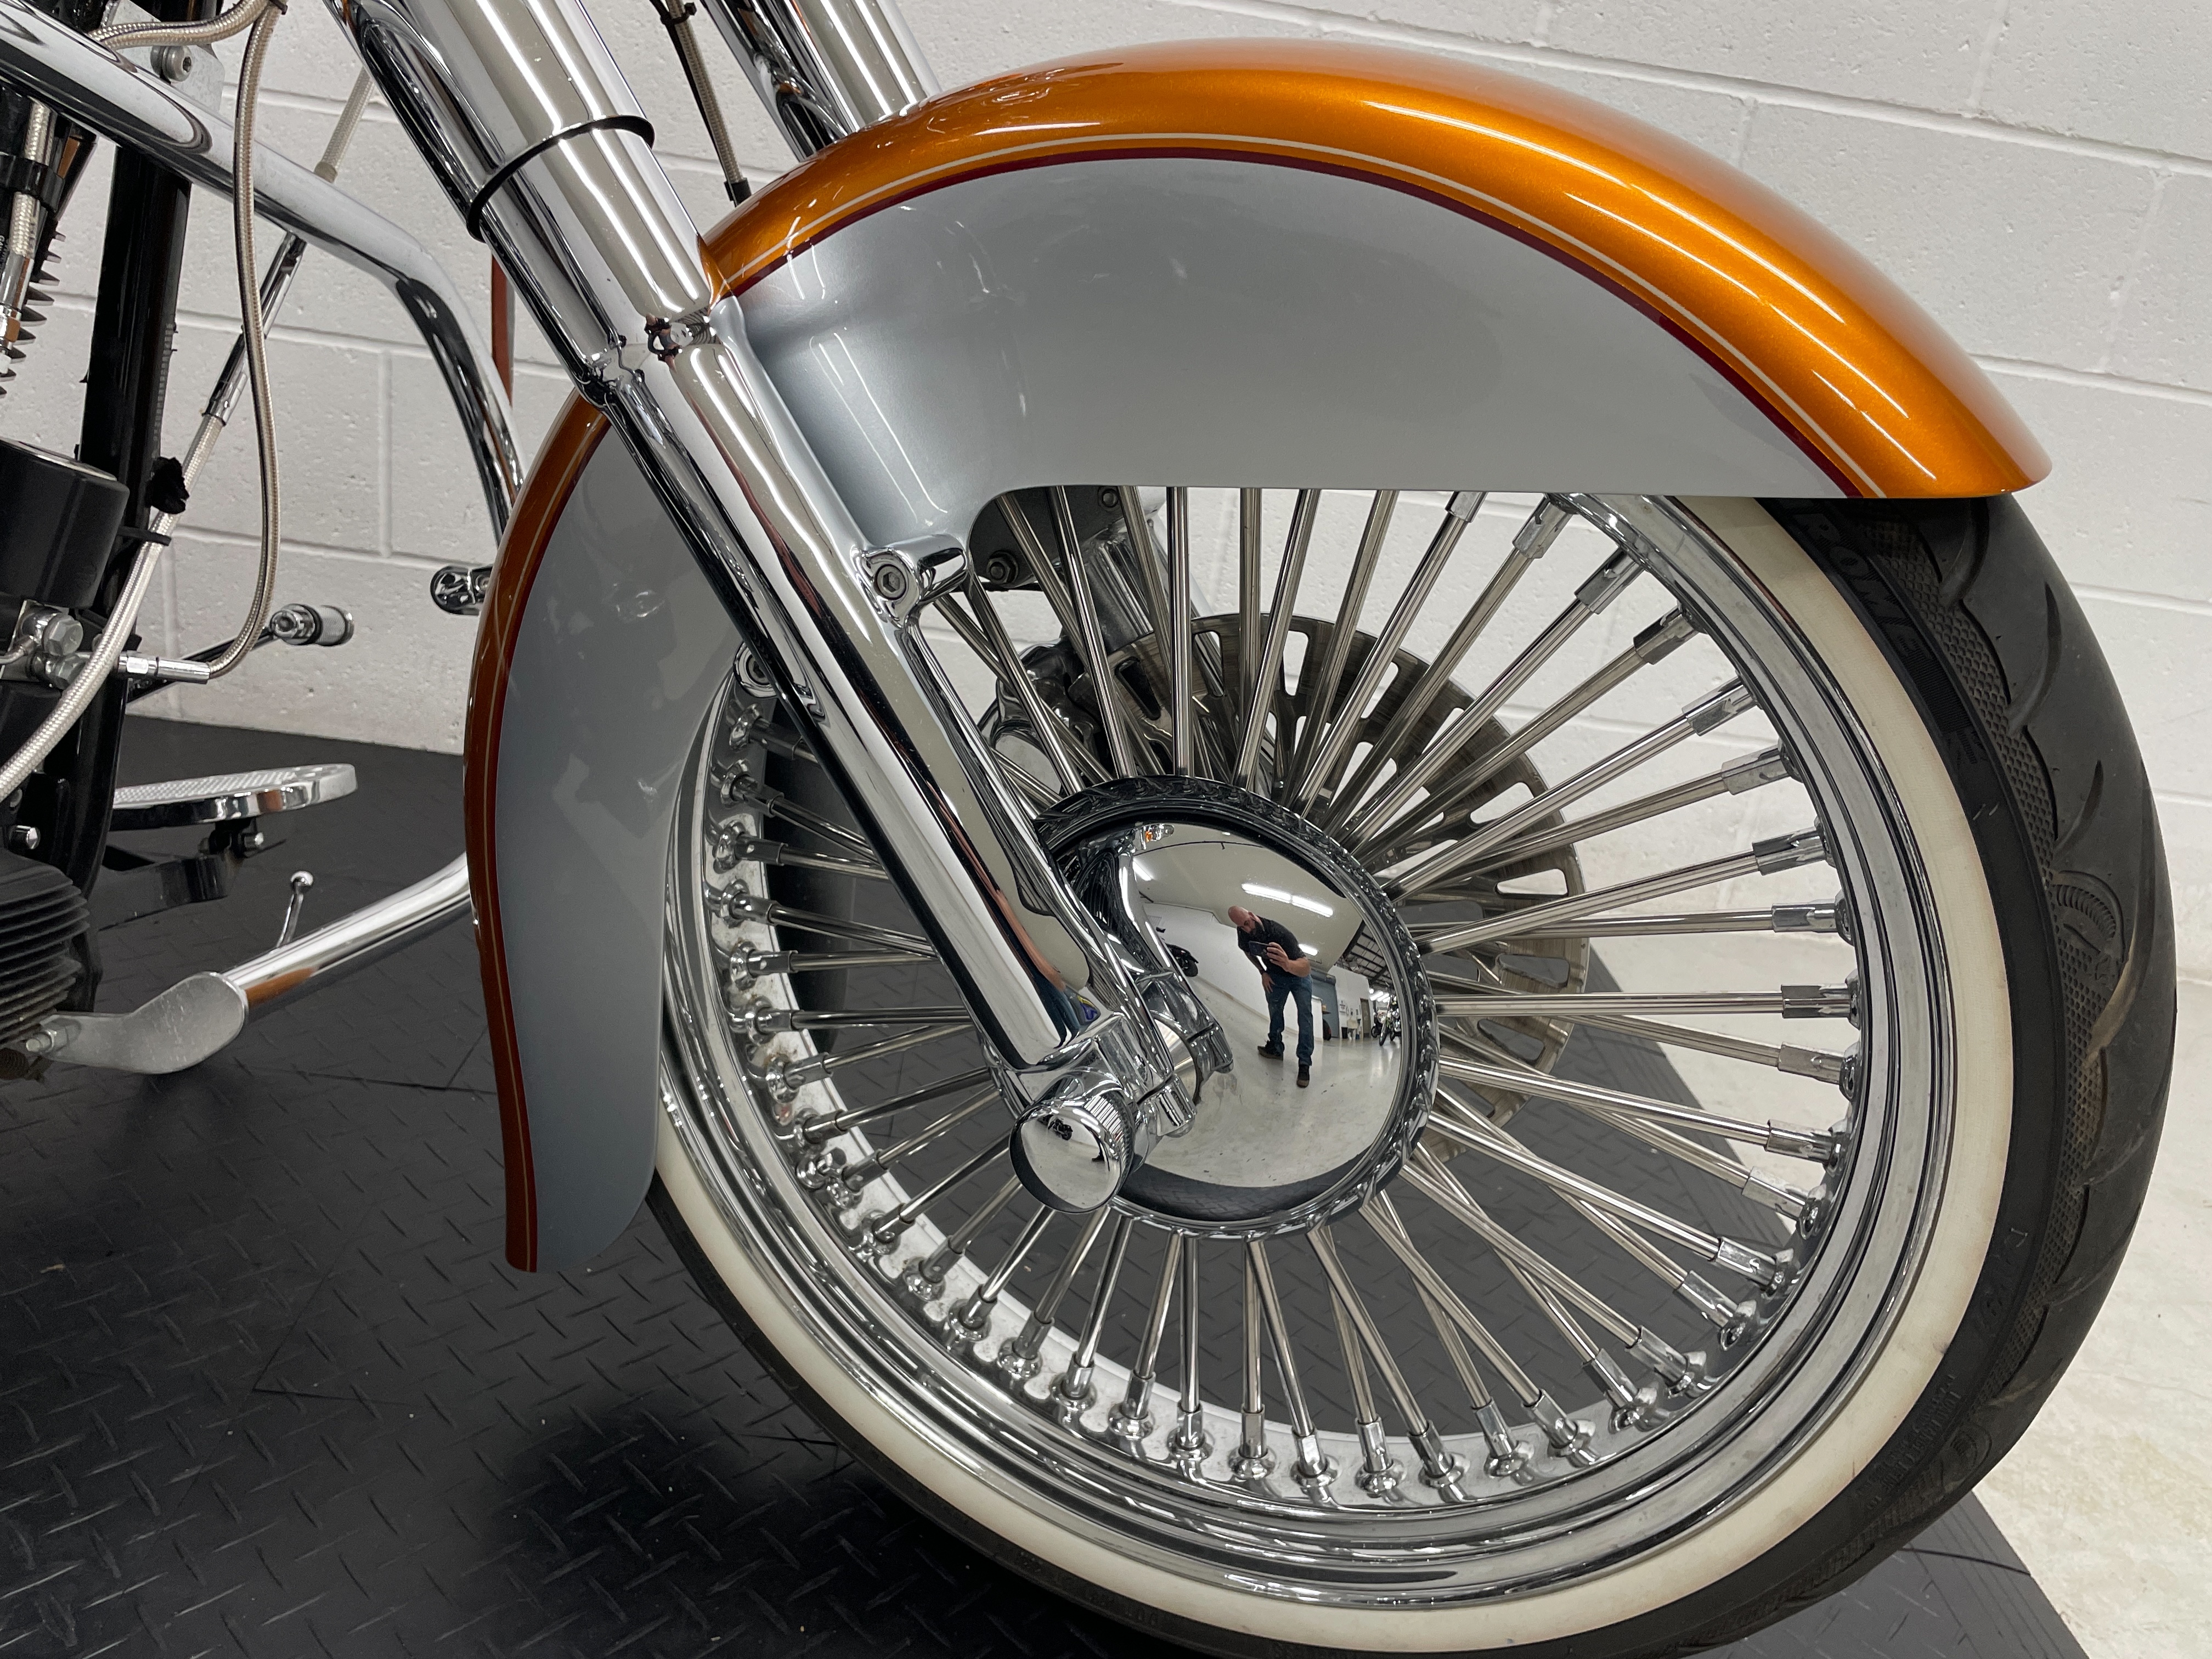 2014 Harley-Davidson Softail Deluxe at Destination Harley-Davidson®, Silverdale, WA 98383